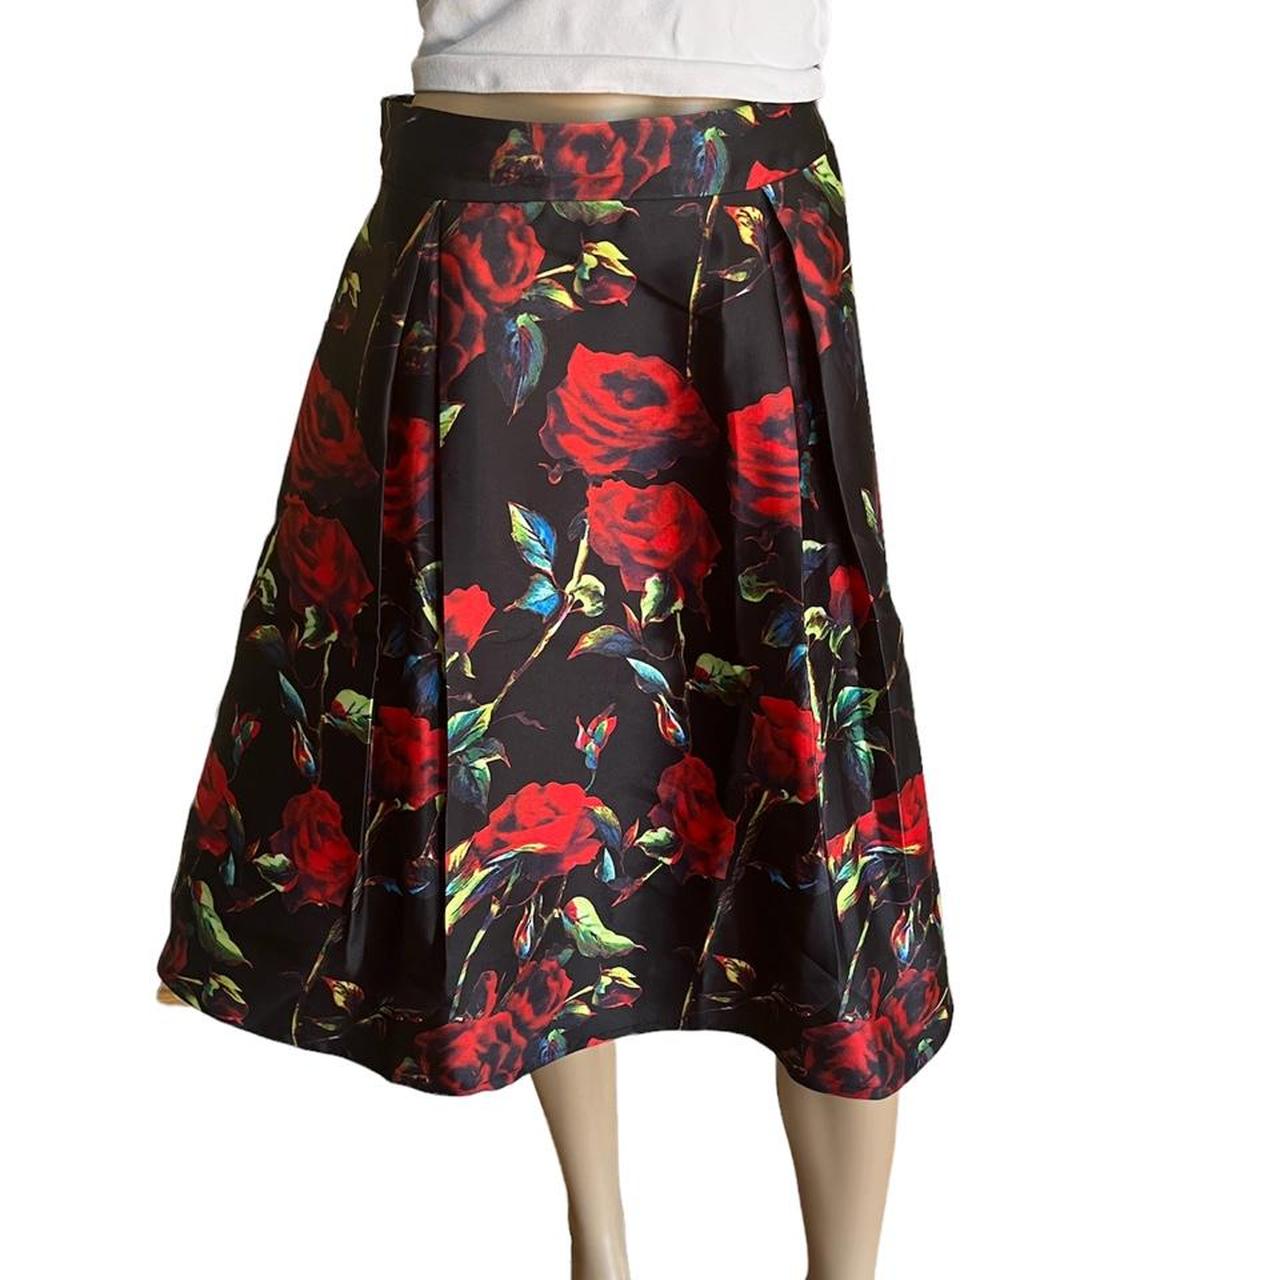 Product Image 1 - Apricot womens skirt
US size 10